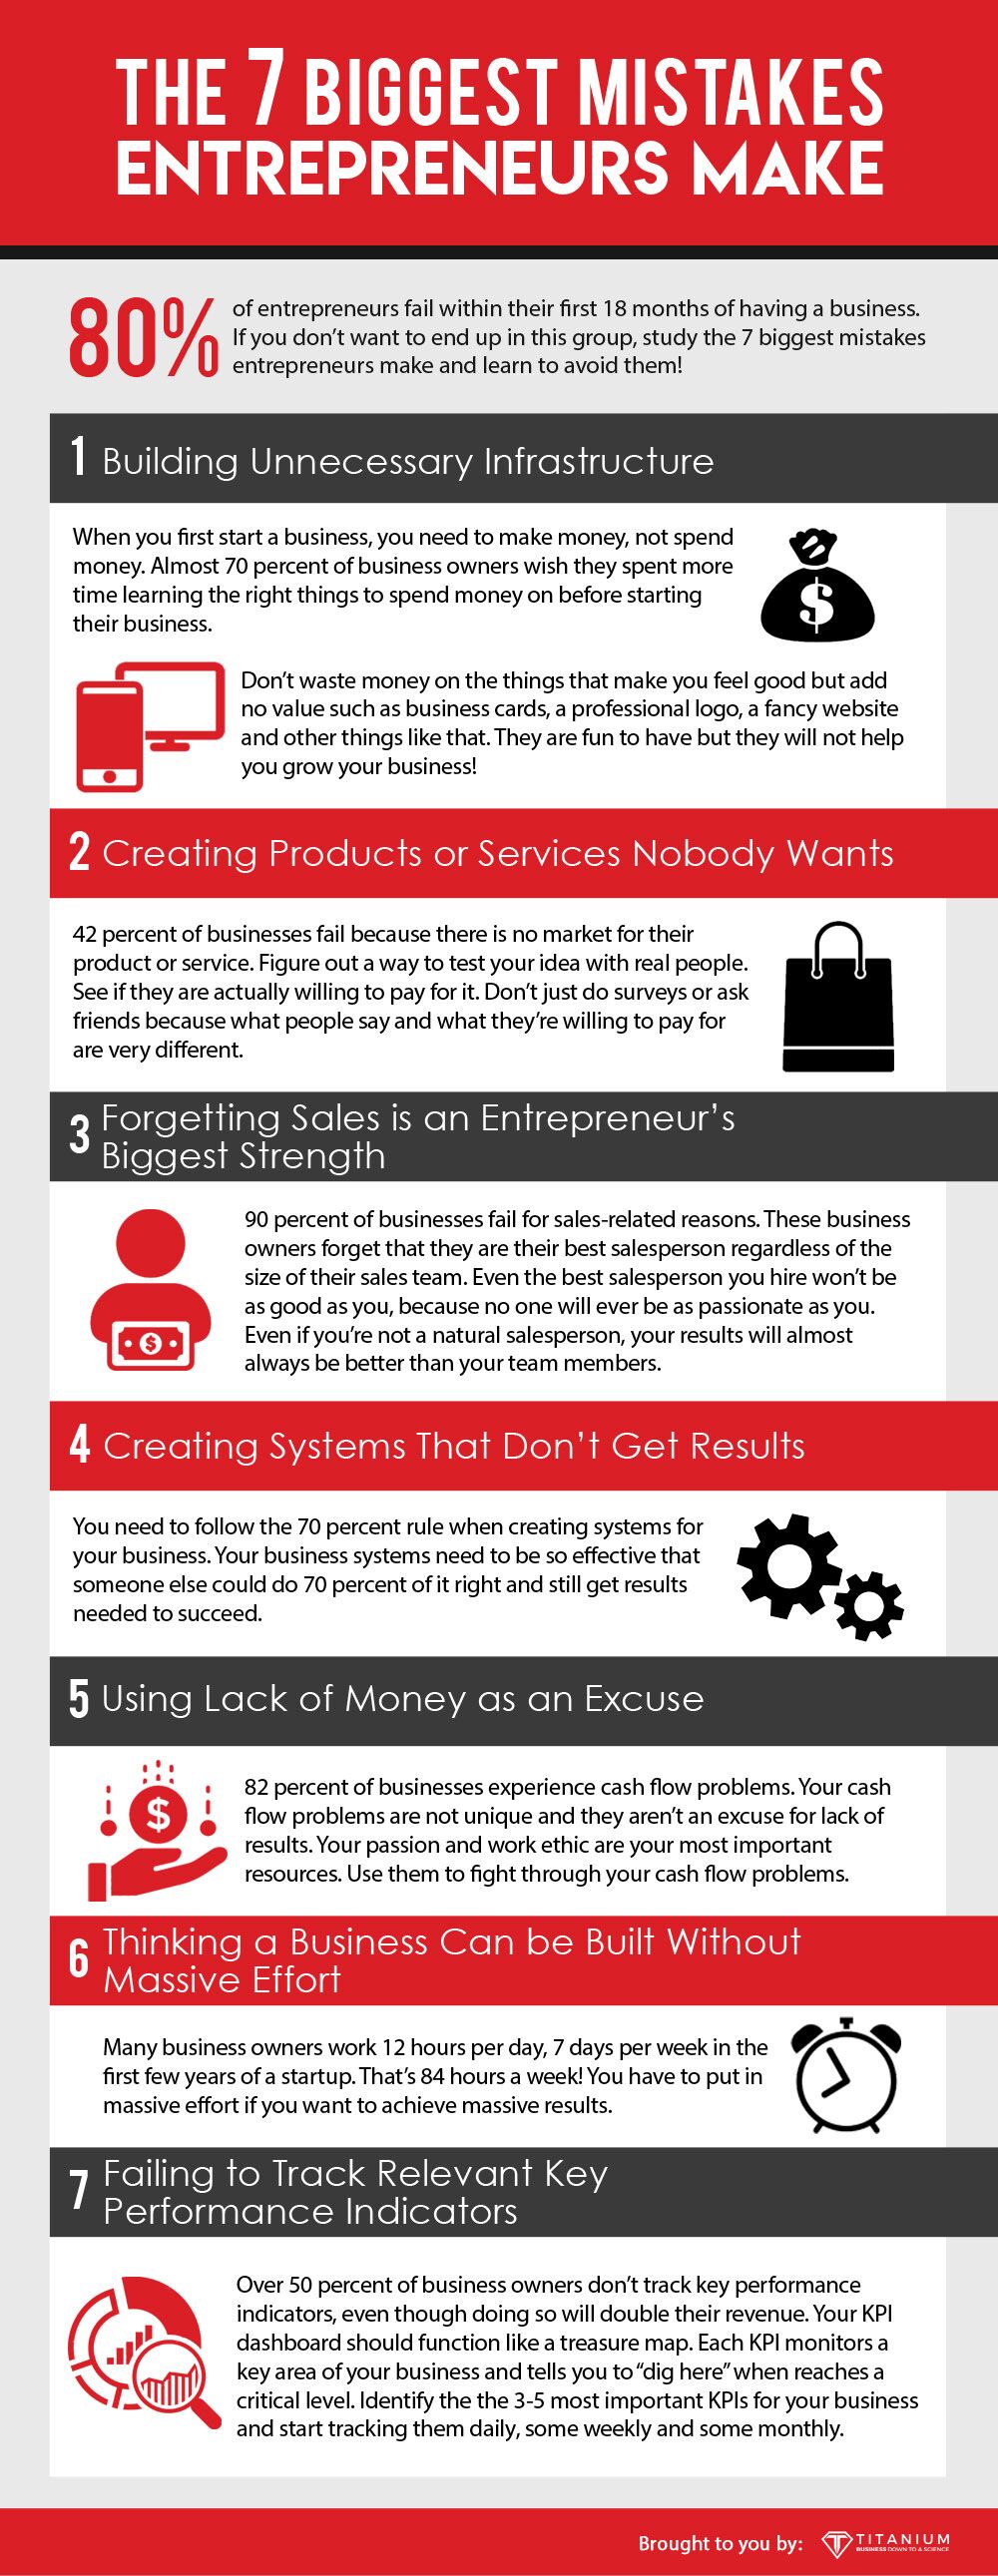 The 7 Biggest Mistakes Entrepreneurs Make